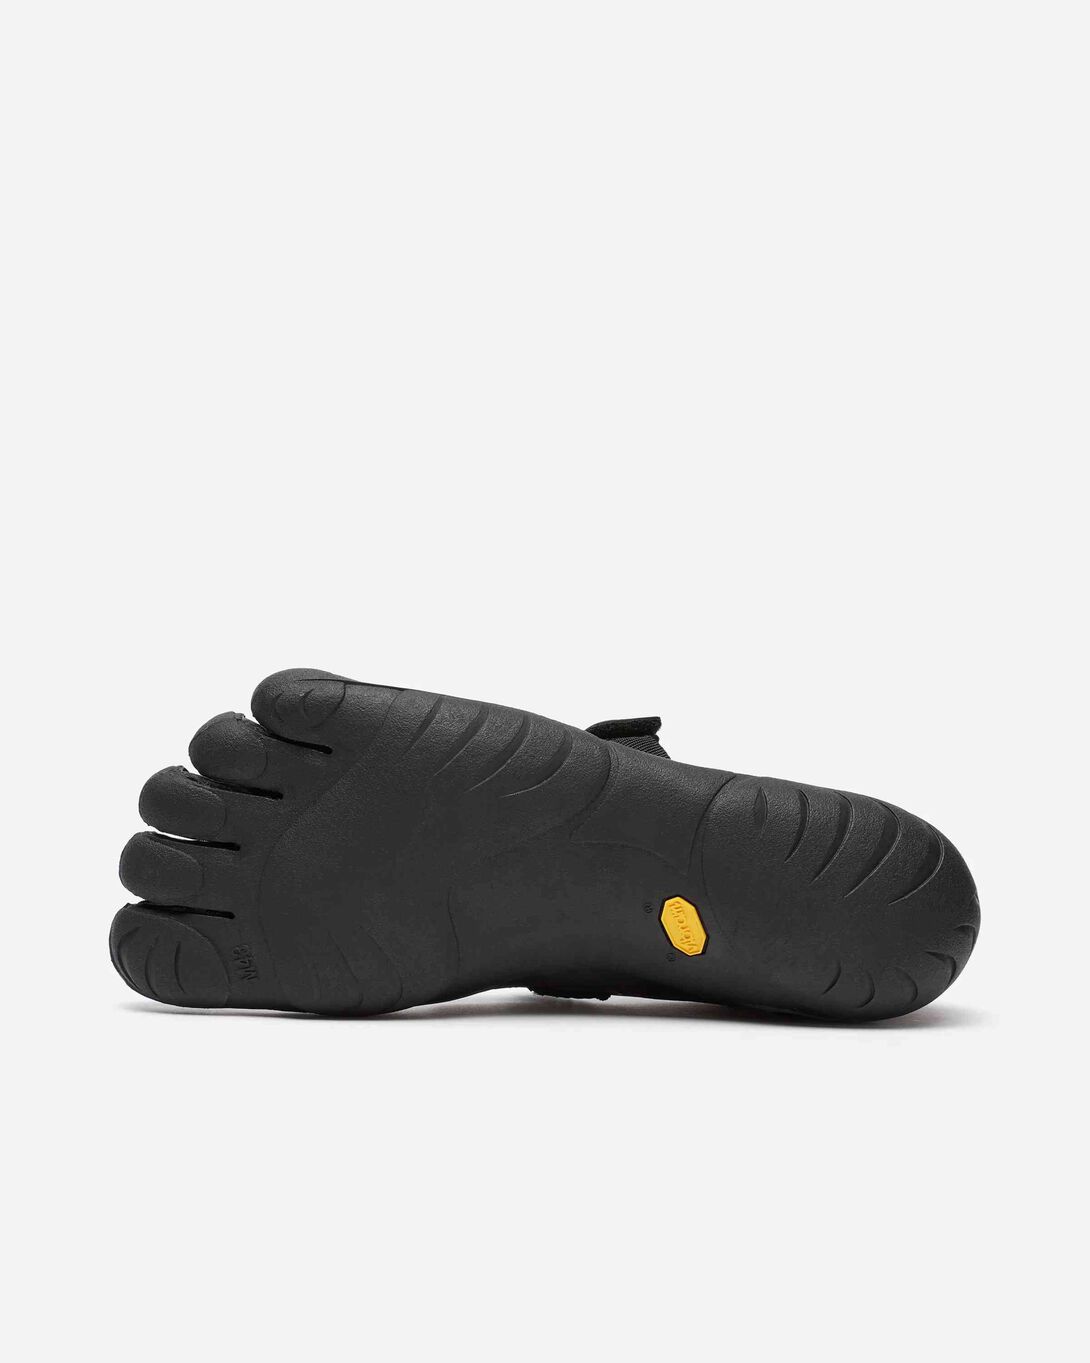 Vibram FiveFingers Men's KSO Barefoot Shoes Black